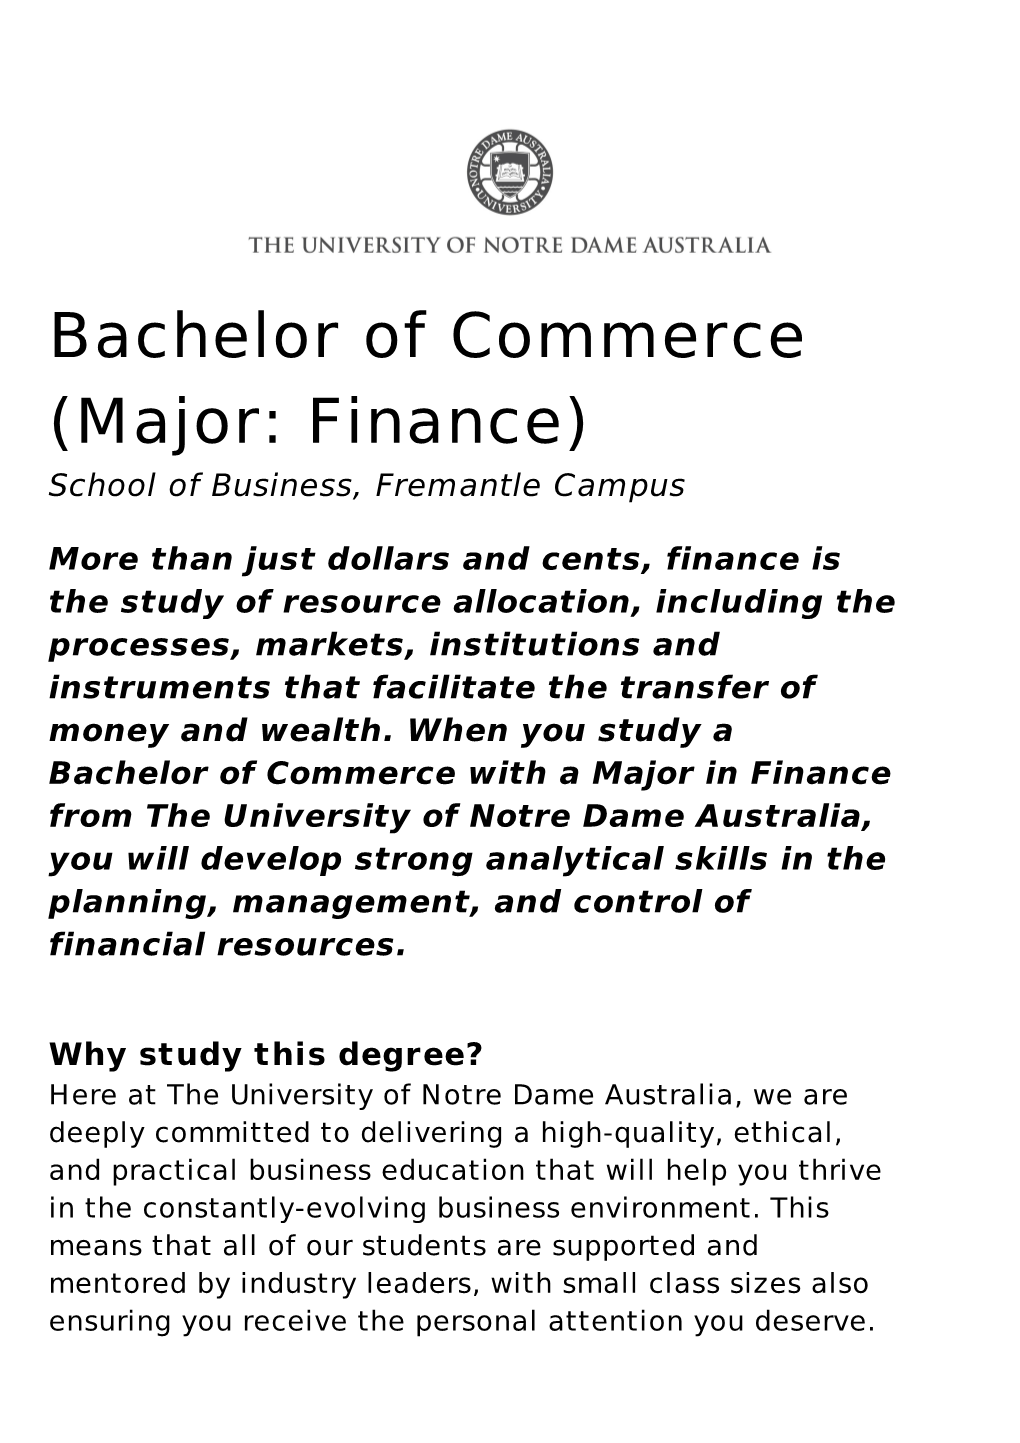 Bachelor of Commerce (Major: Finance) School of Business, Fremantle Campus